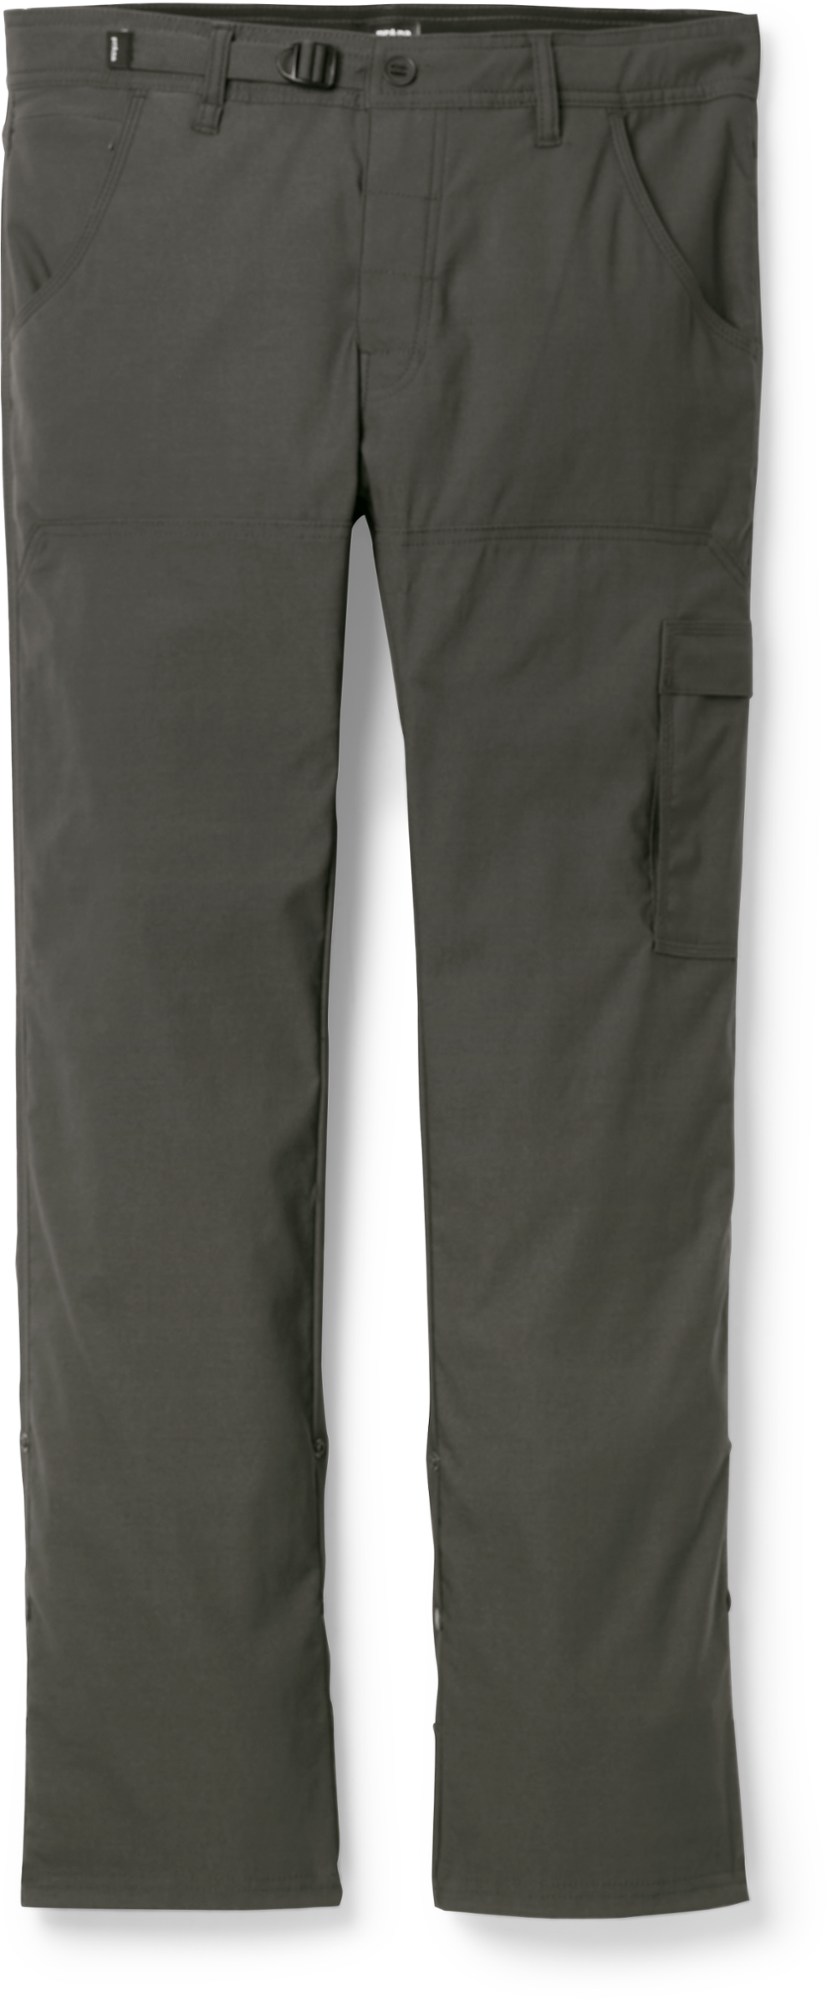 Узкие брюки Stretch Zion II — мужские prAna, серый